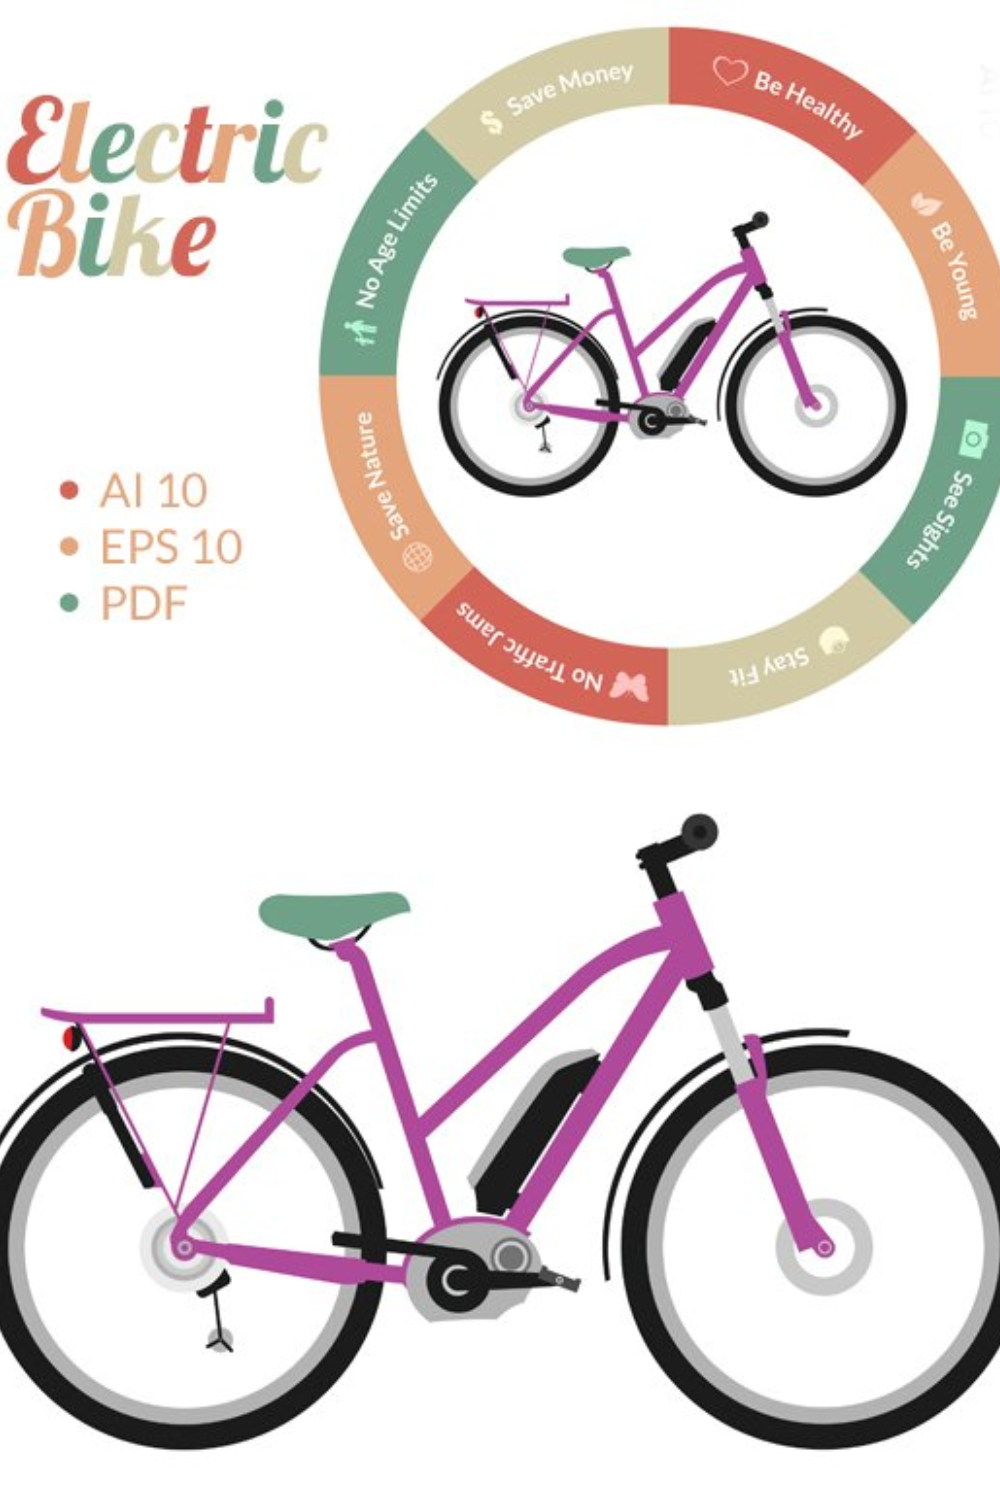 Electric Bike - Pinterest.